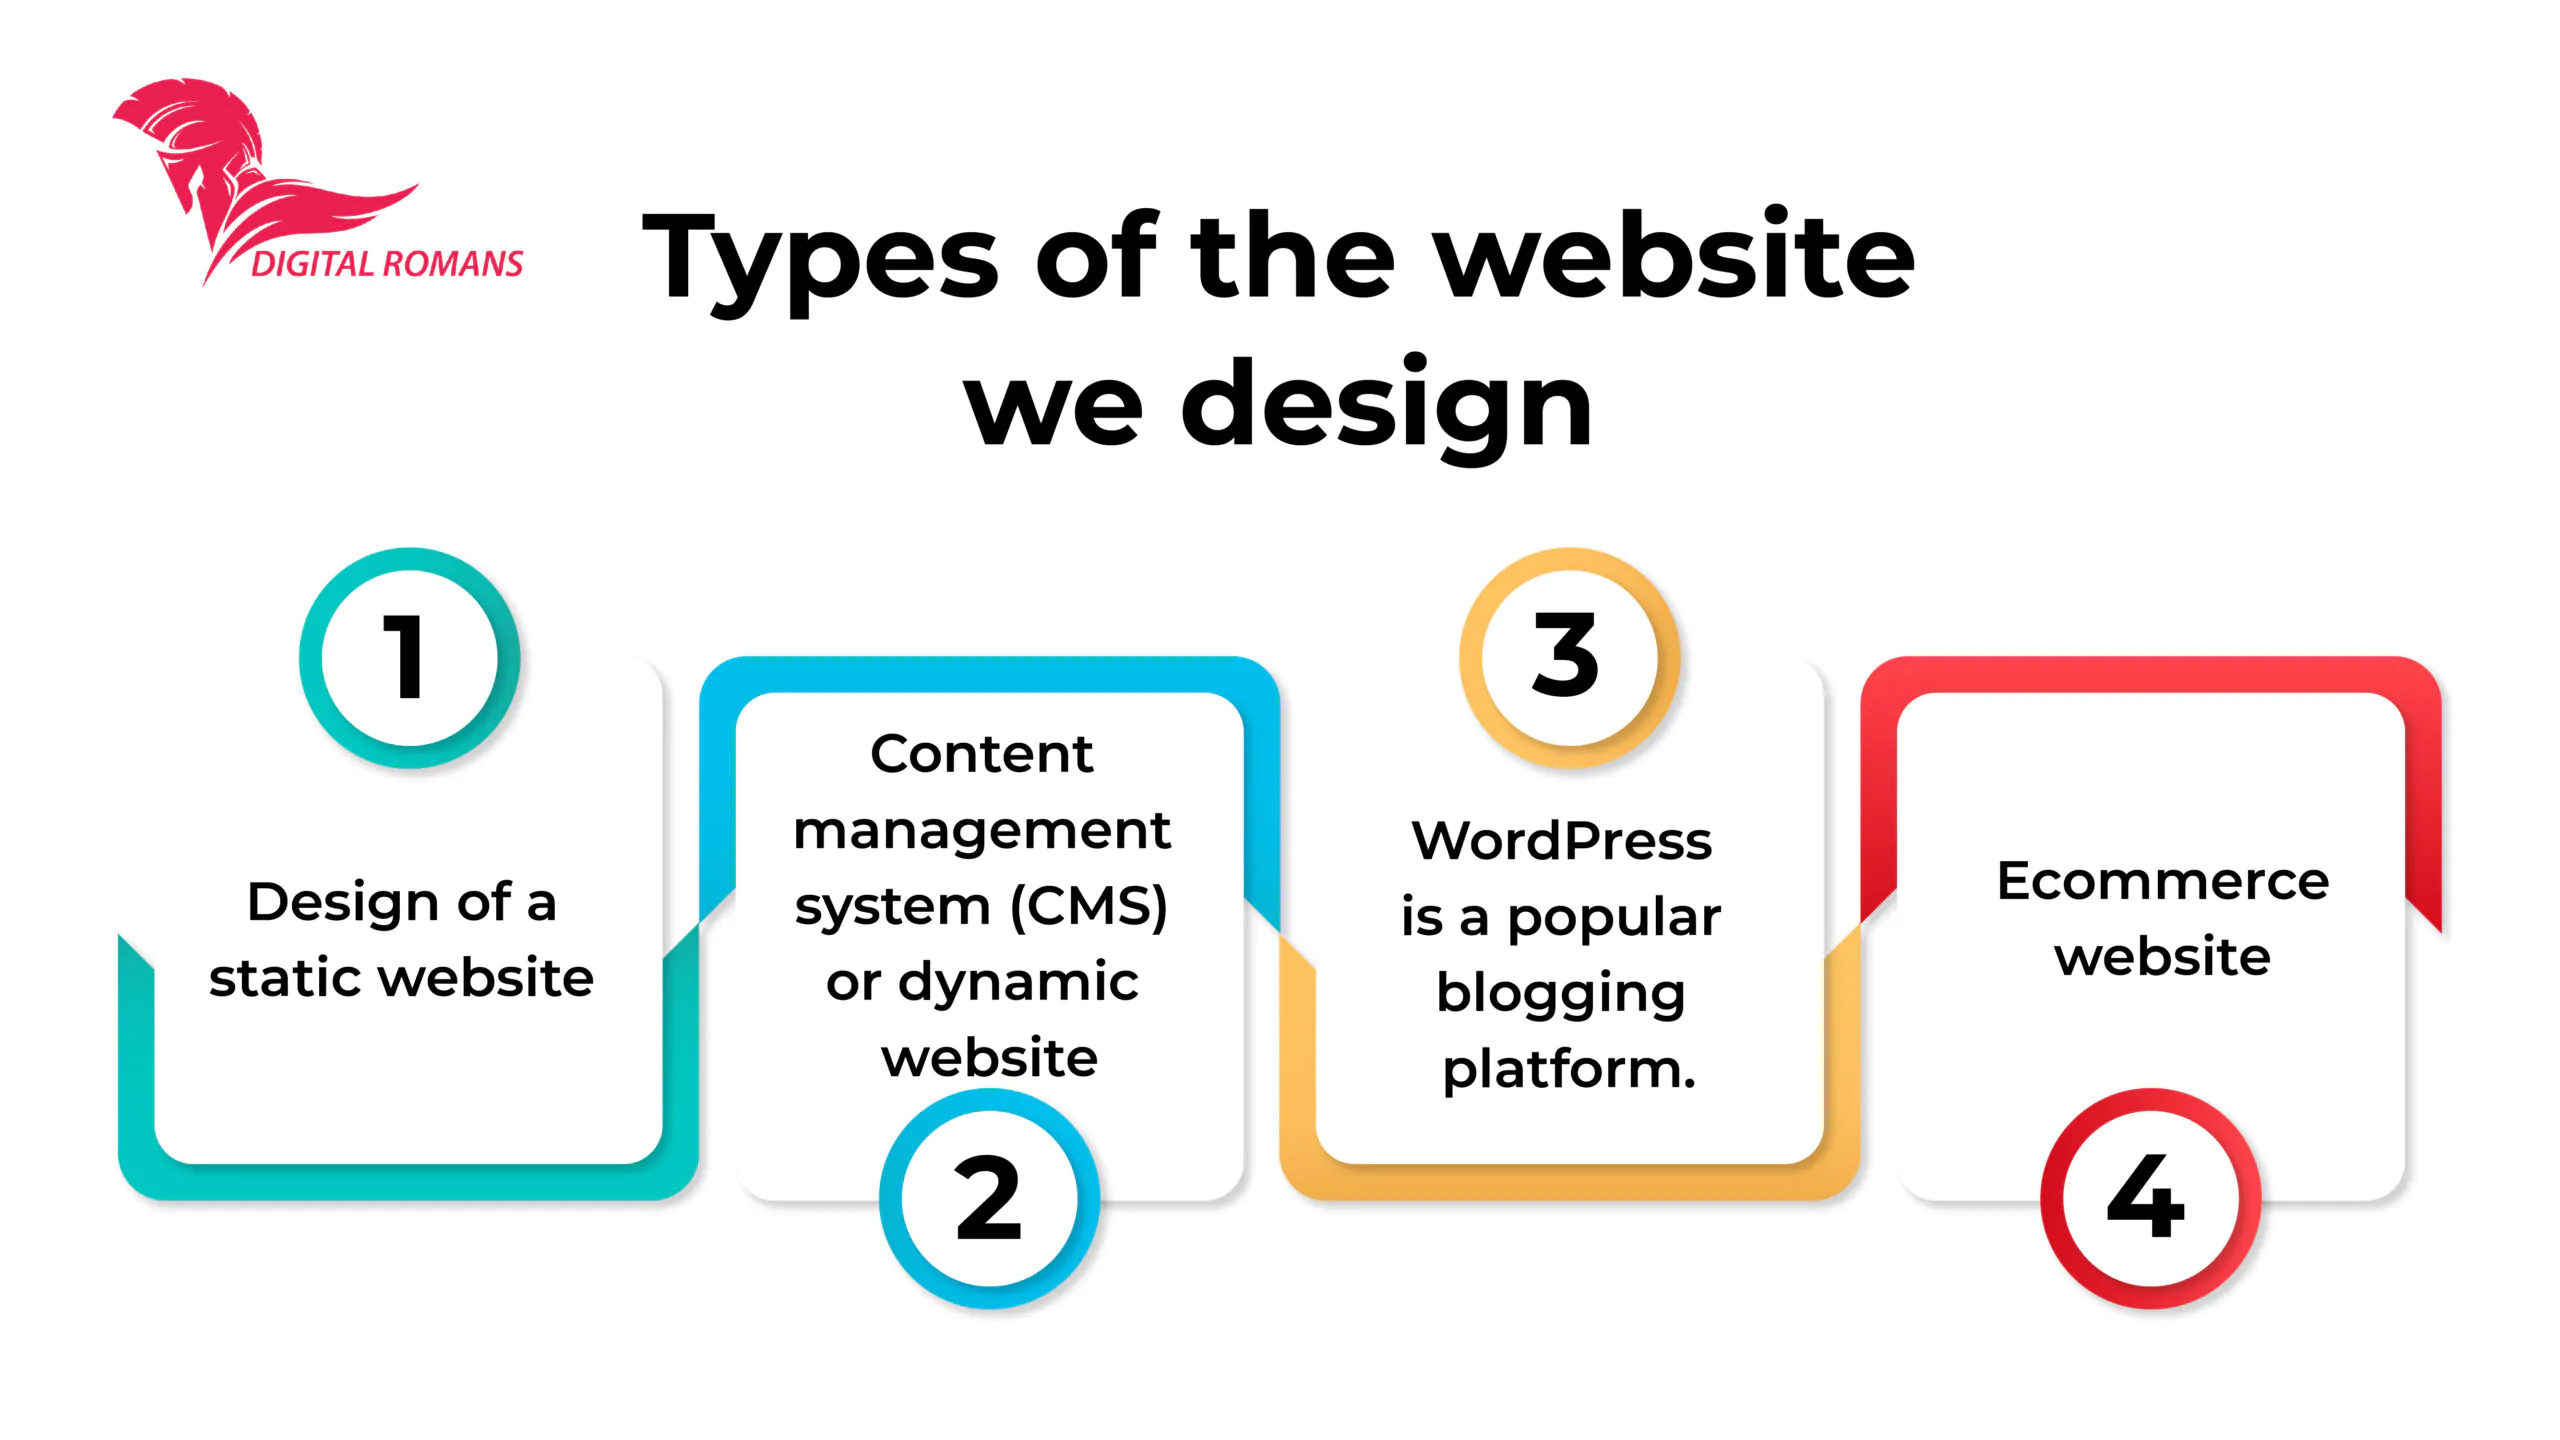 Types of the website we design